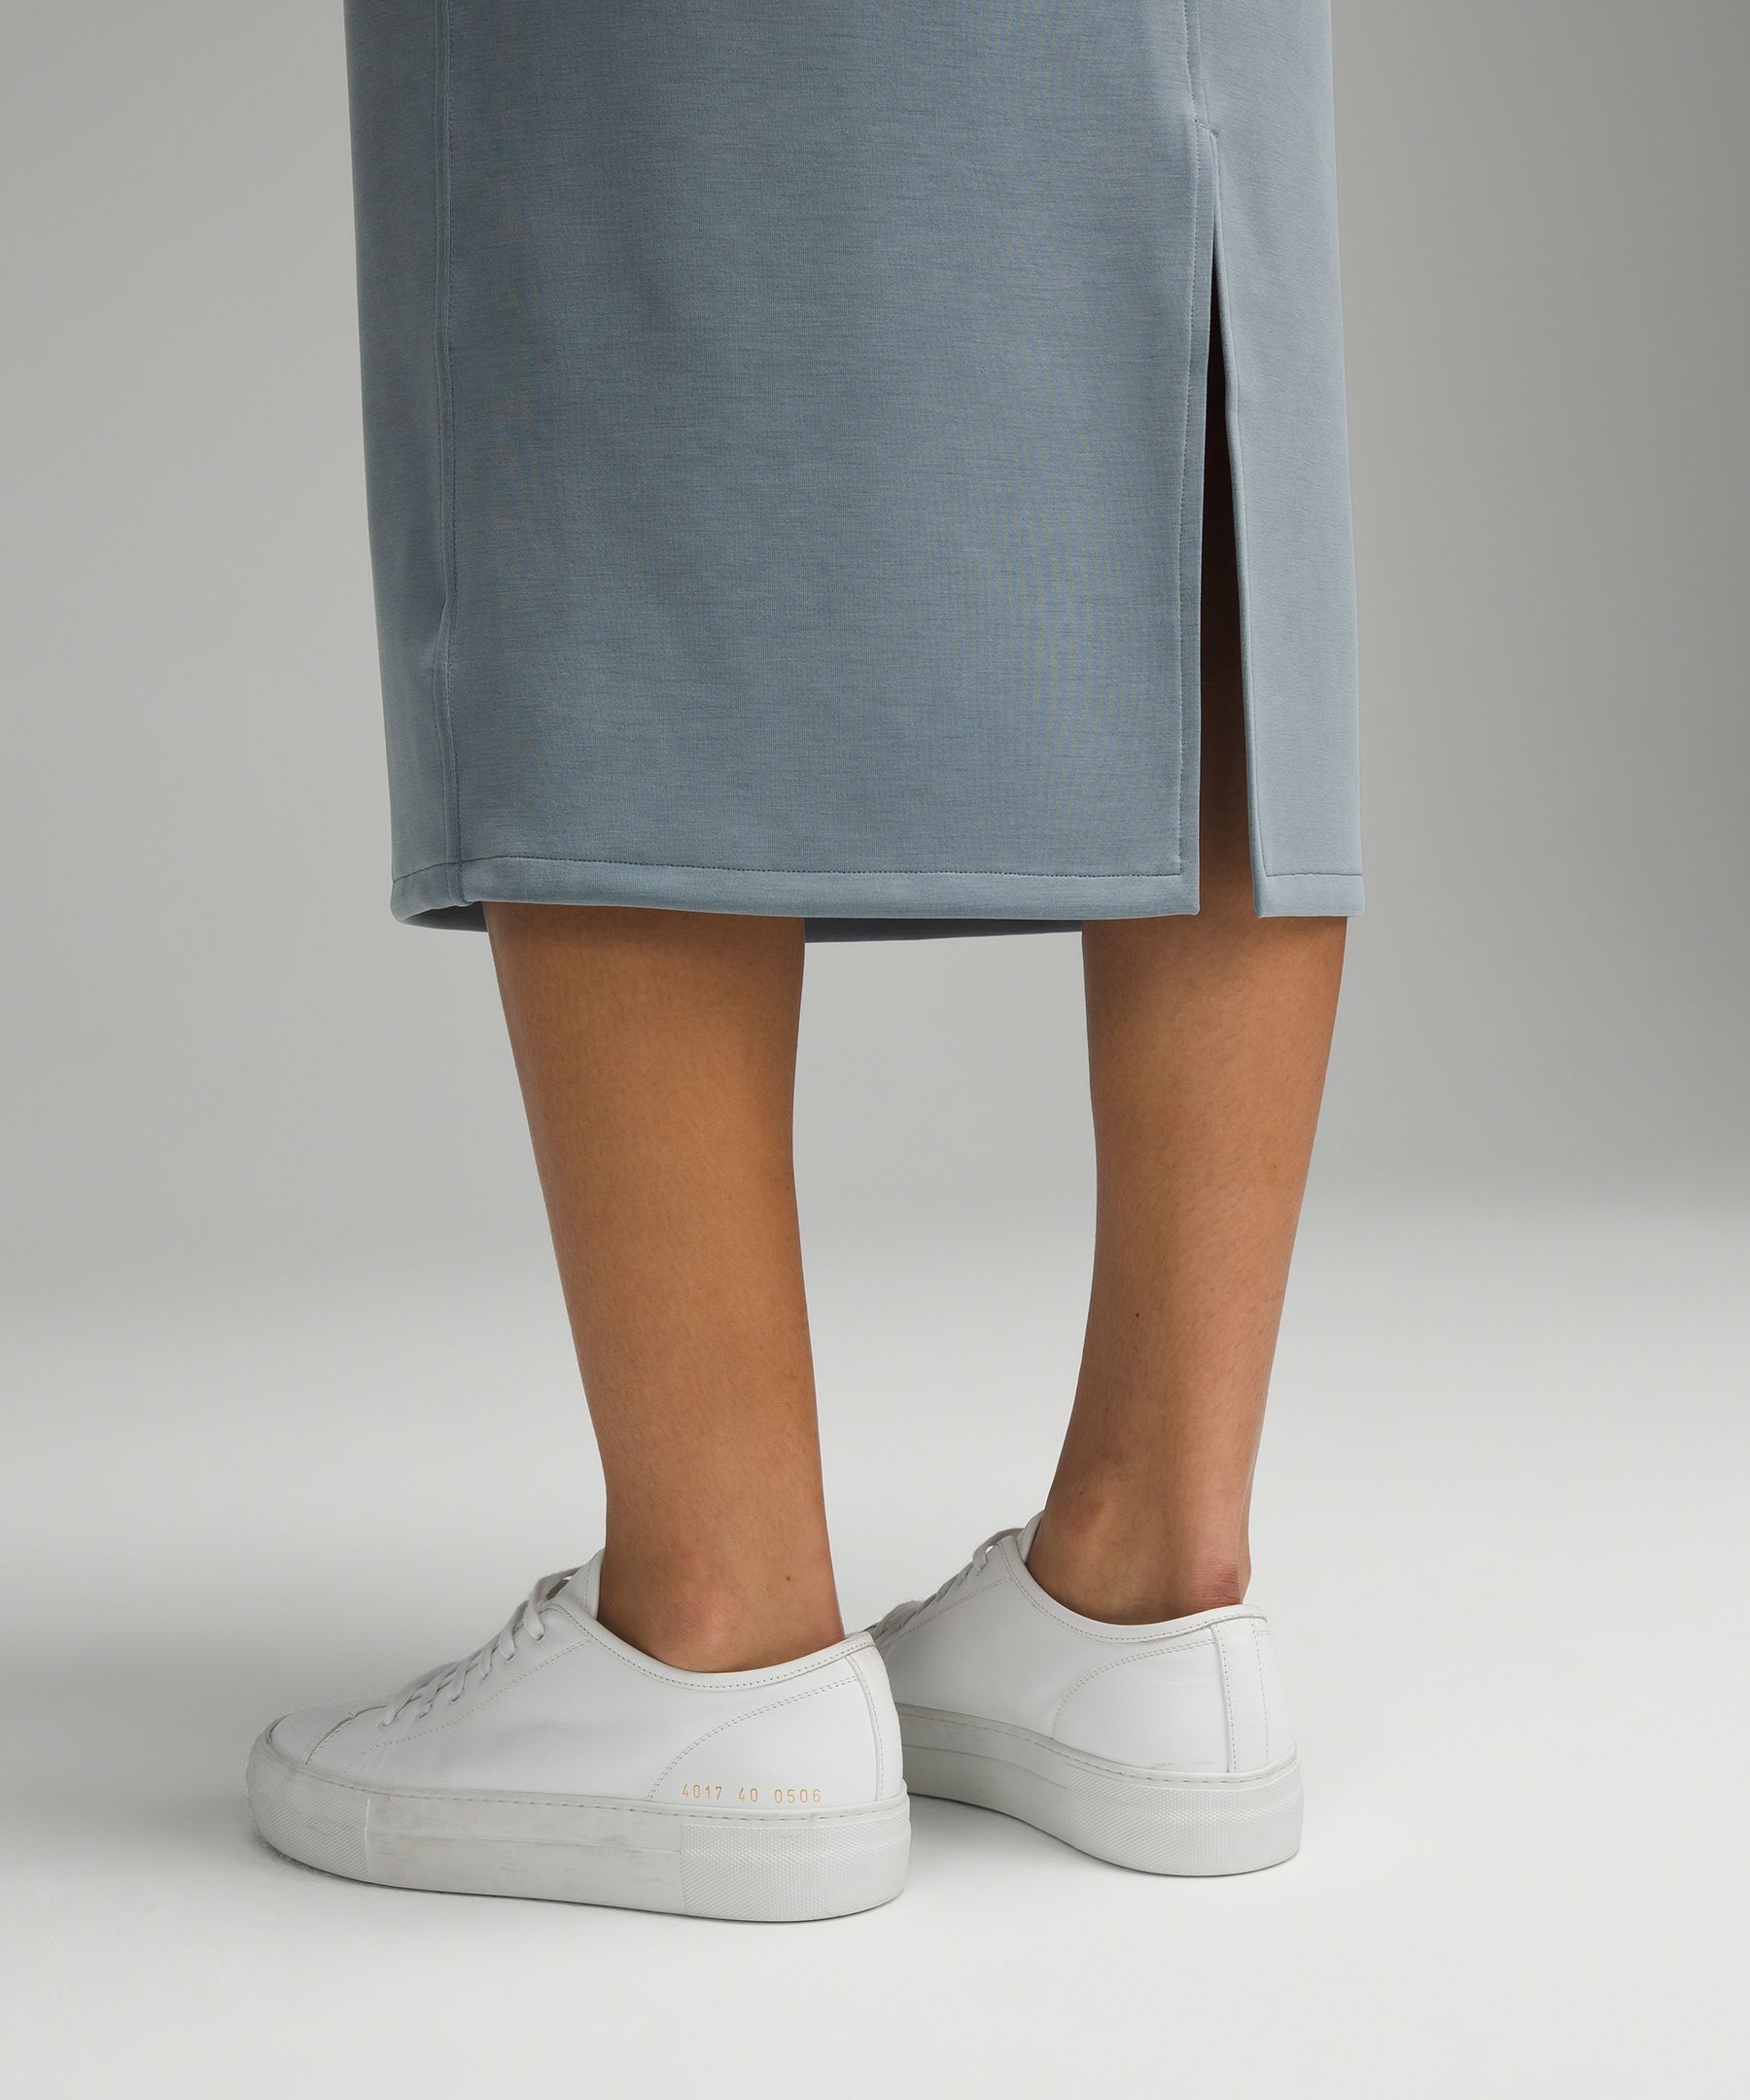 Shop Lululemon Softstreme High-rise Midi Skirt